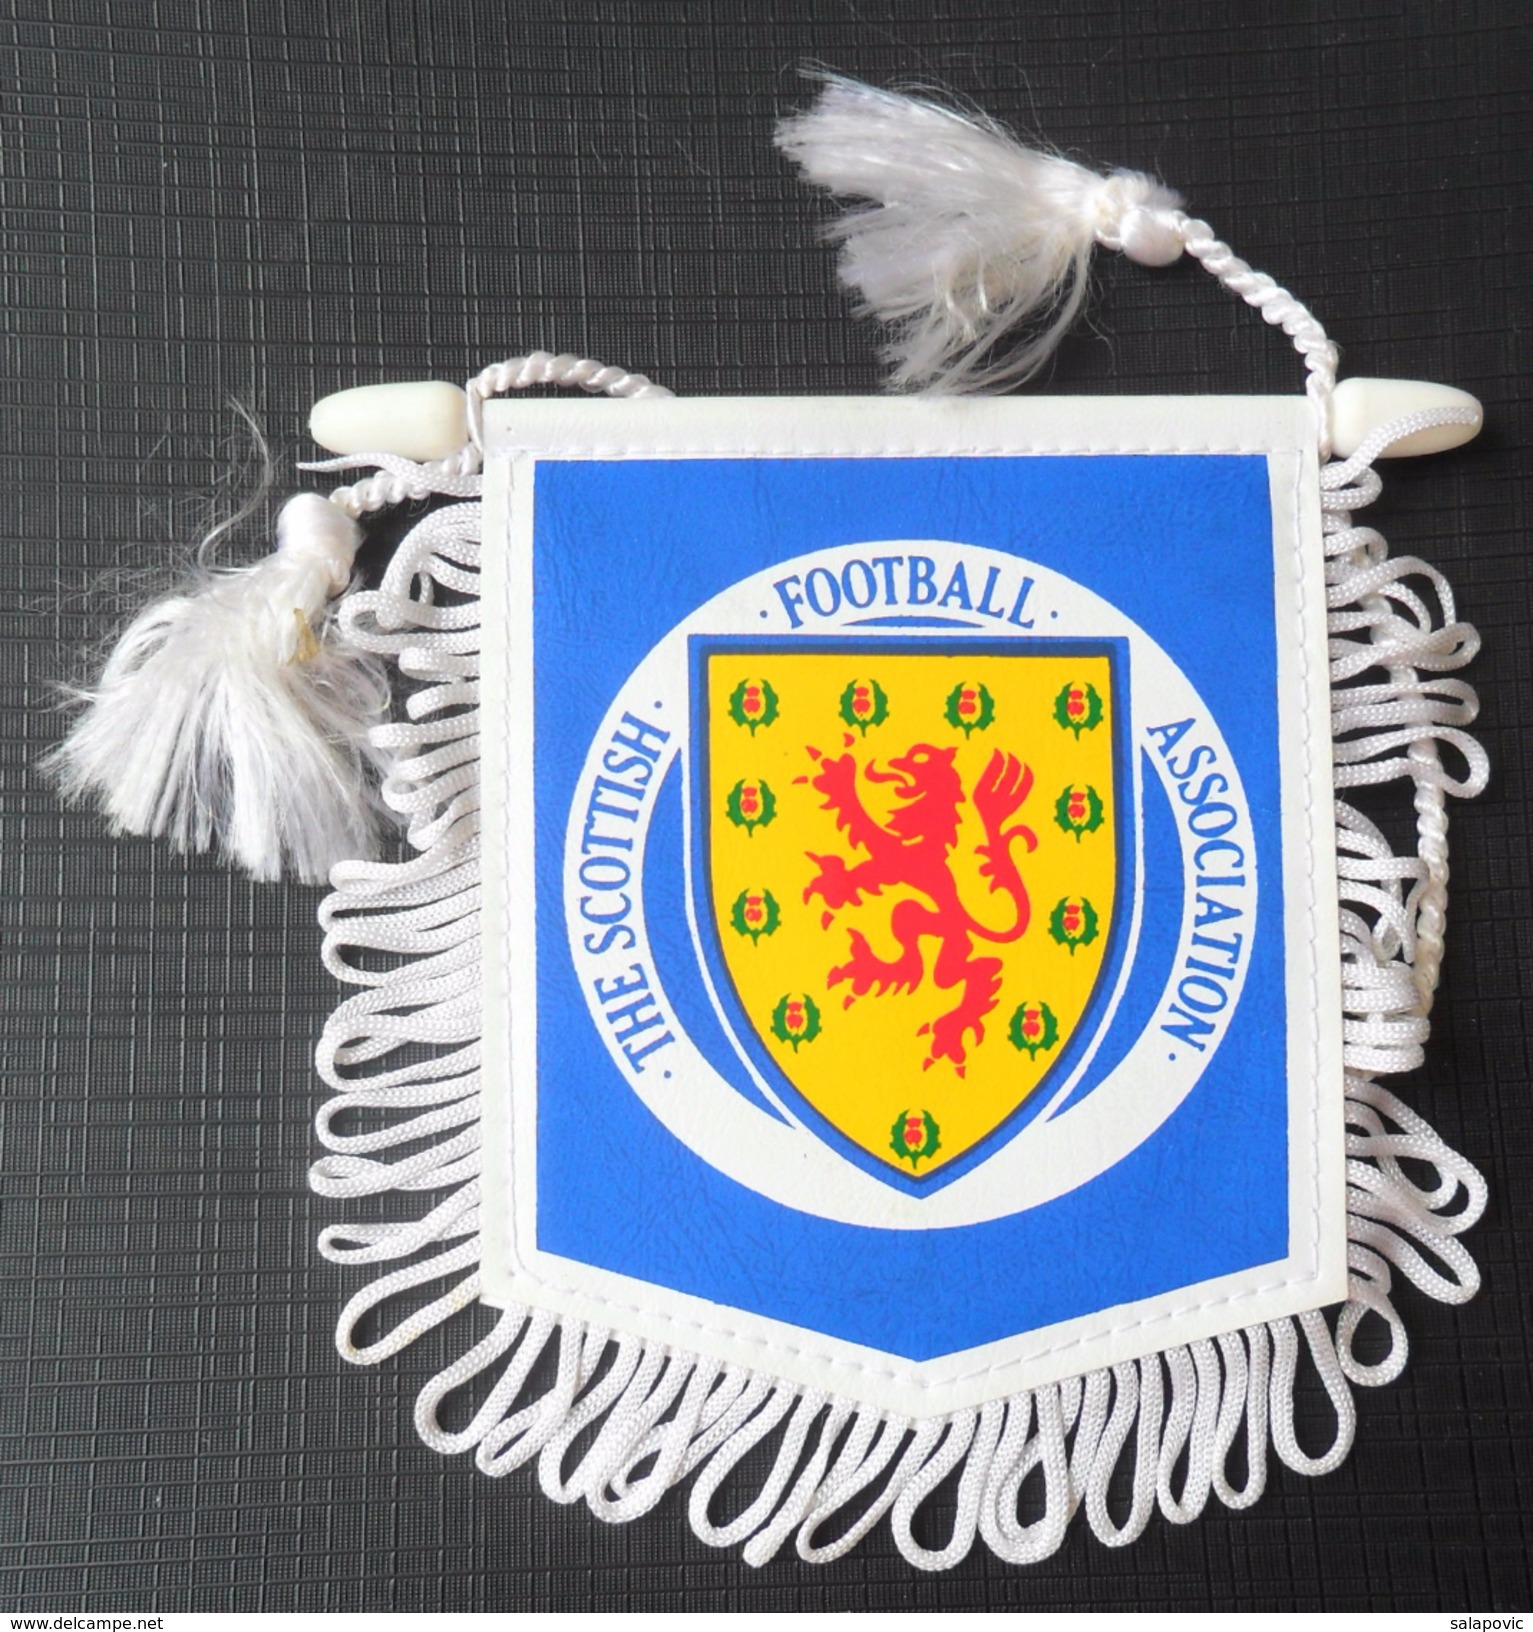 Scottish Football Association FOOTBALL CLUB, SOCCER / FUTBOL / CALCIO OLD PENNANT, SPORTS FLAG - Bekleidung, Souvenirs Und Sonstige